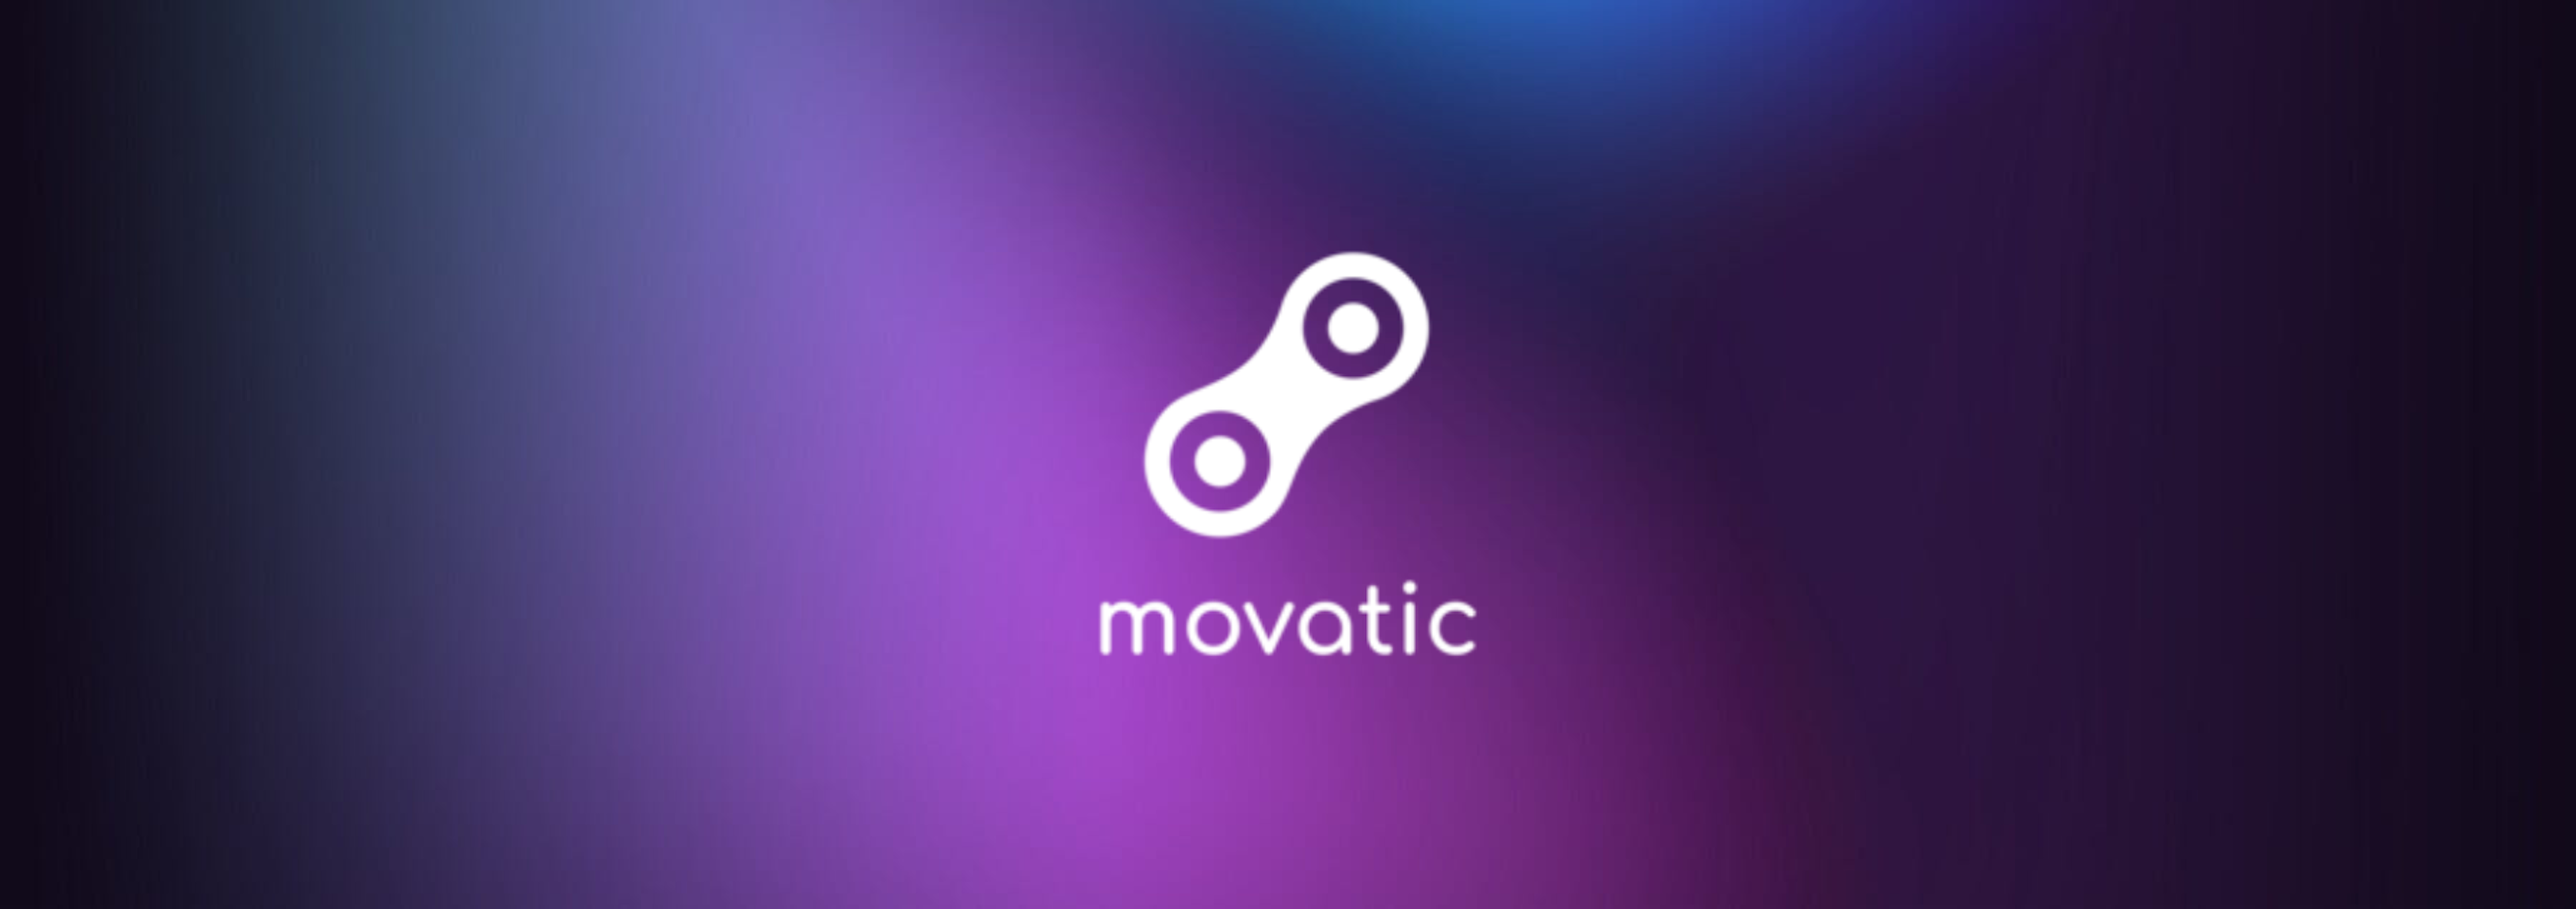 movatic-thumbnail